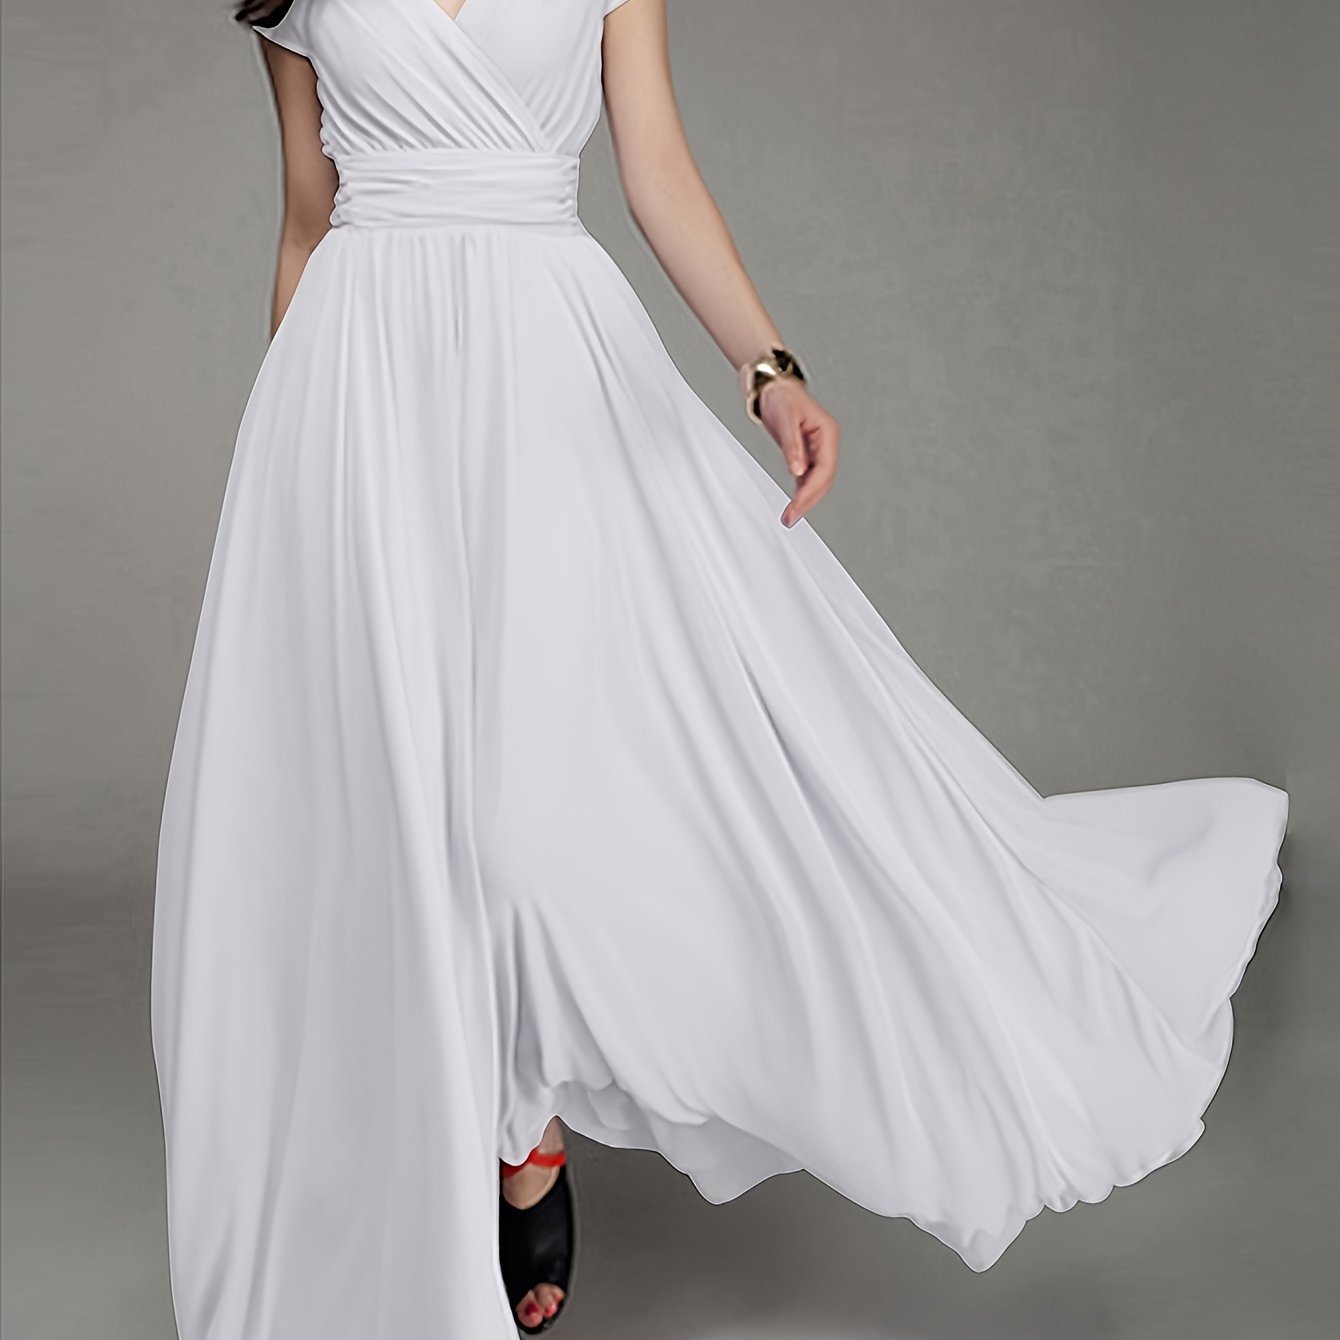 SENGPA Long Bodycon V-Neck Solid Polyester Womens Elegant Bridesmaid Dress - Form-Fitting, No Elasticity, Woven, No Printing, No Sheer - Perfect for Wedding Party, Elegant Dressing